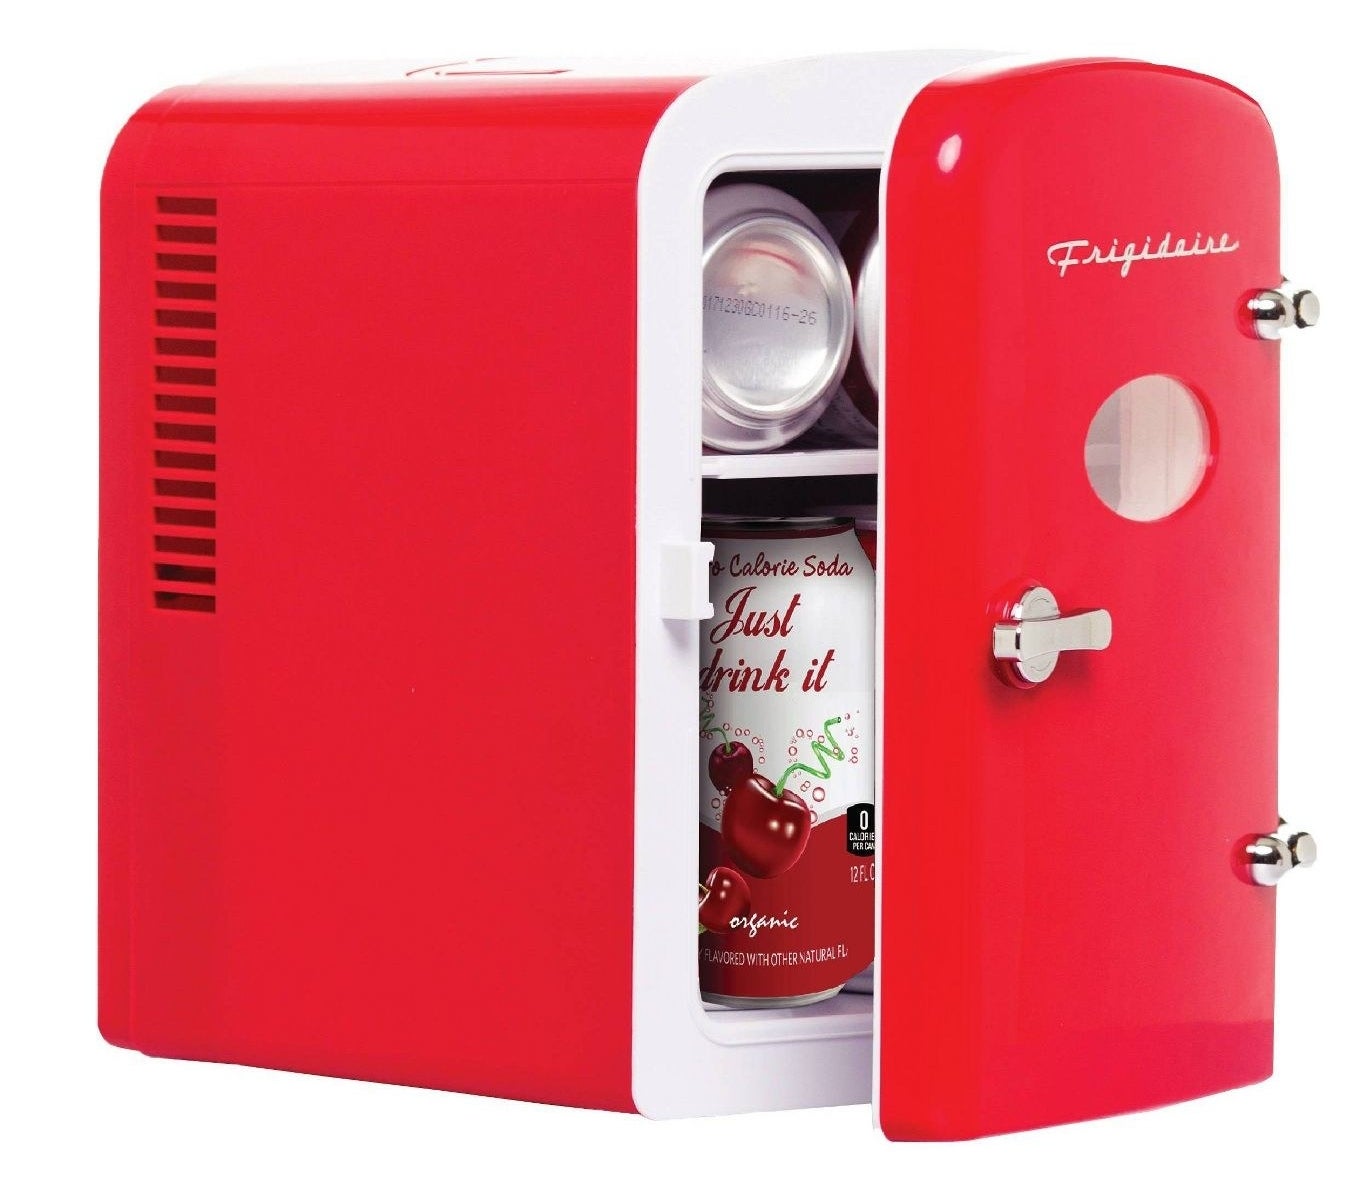 Red mini-fridge